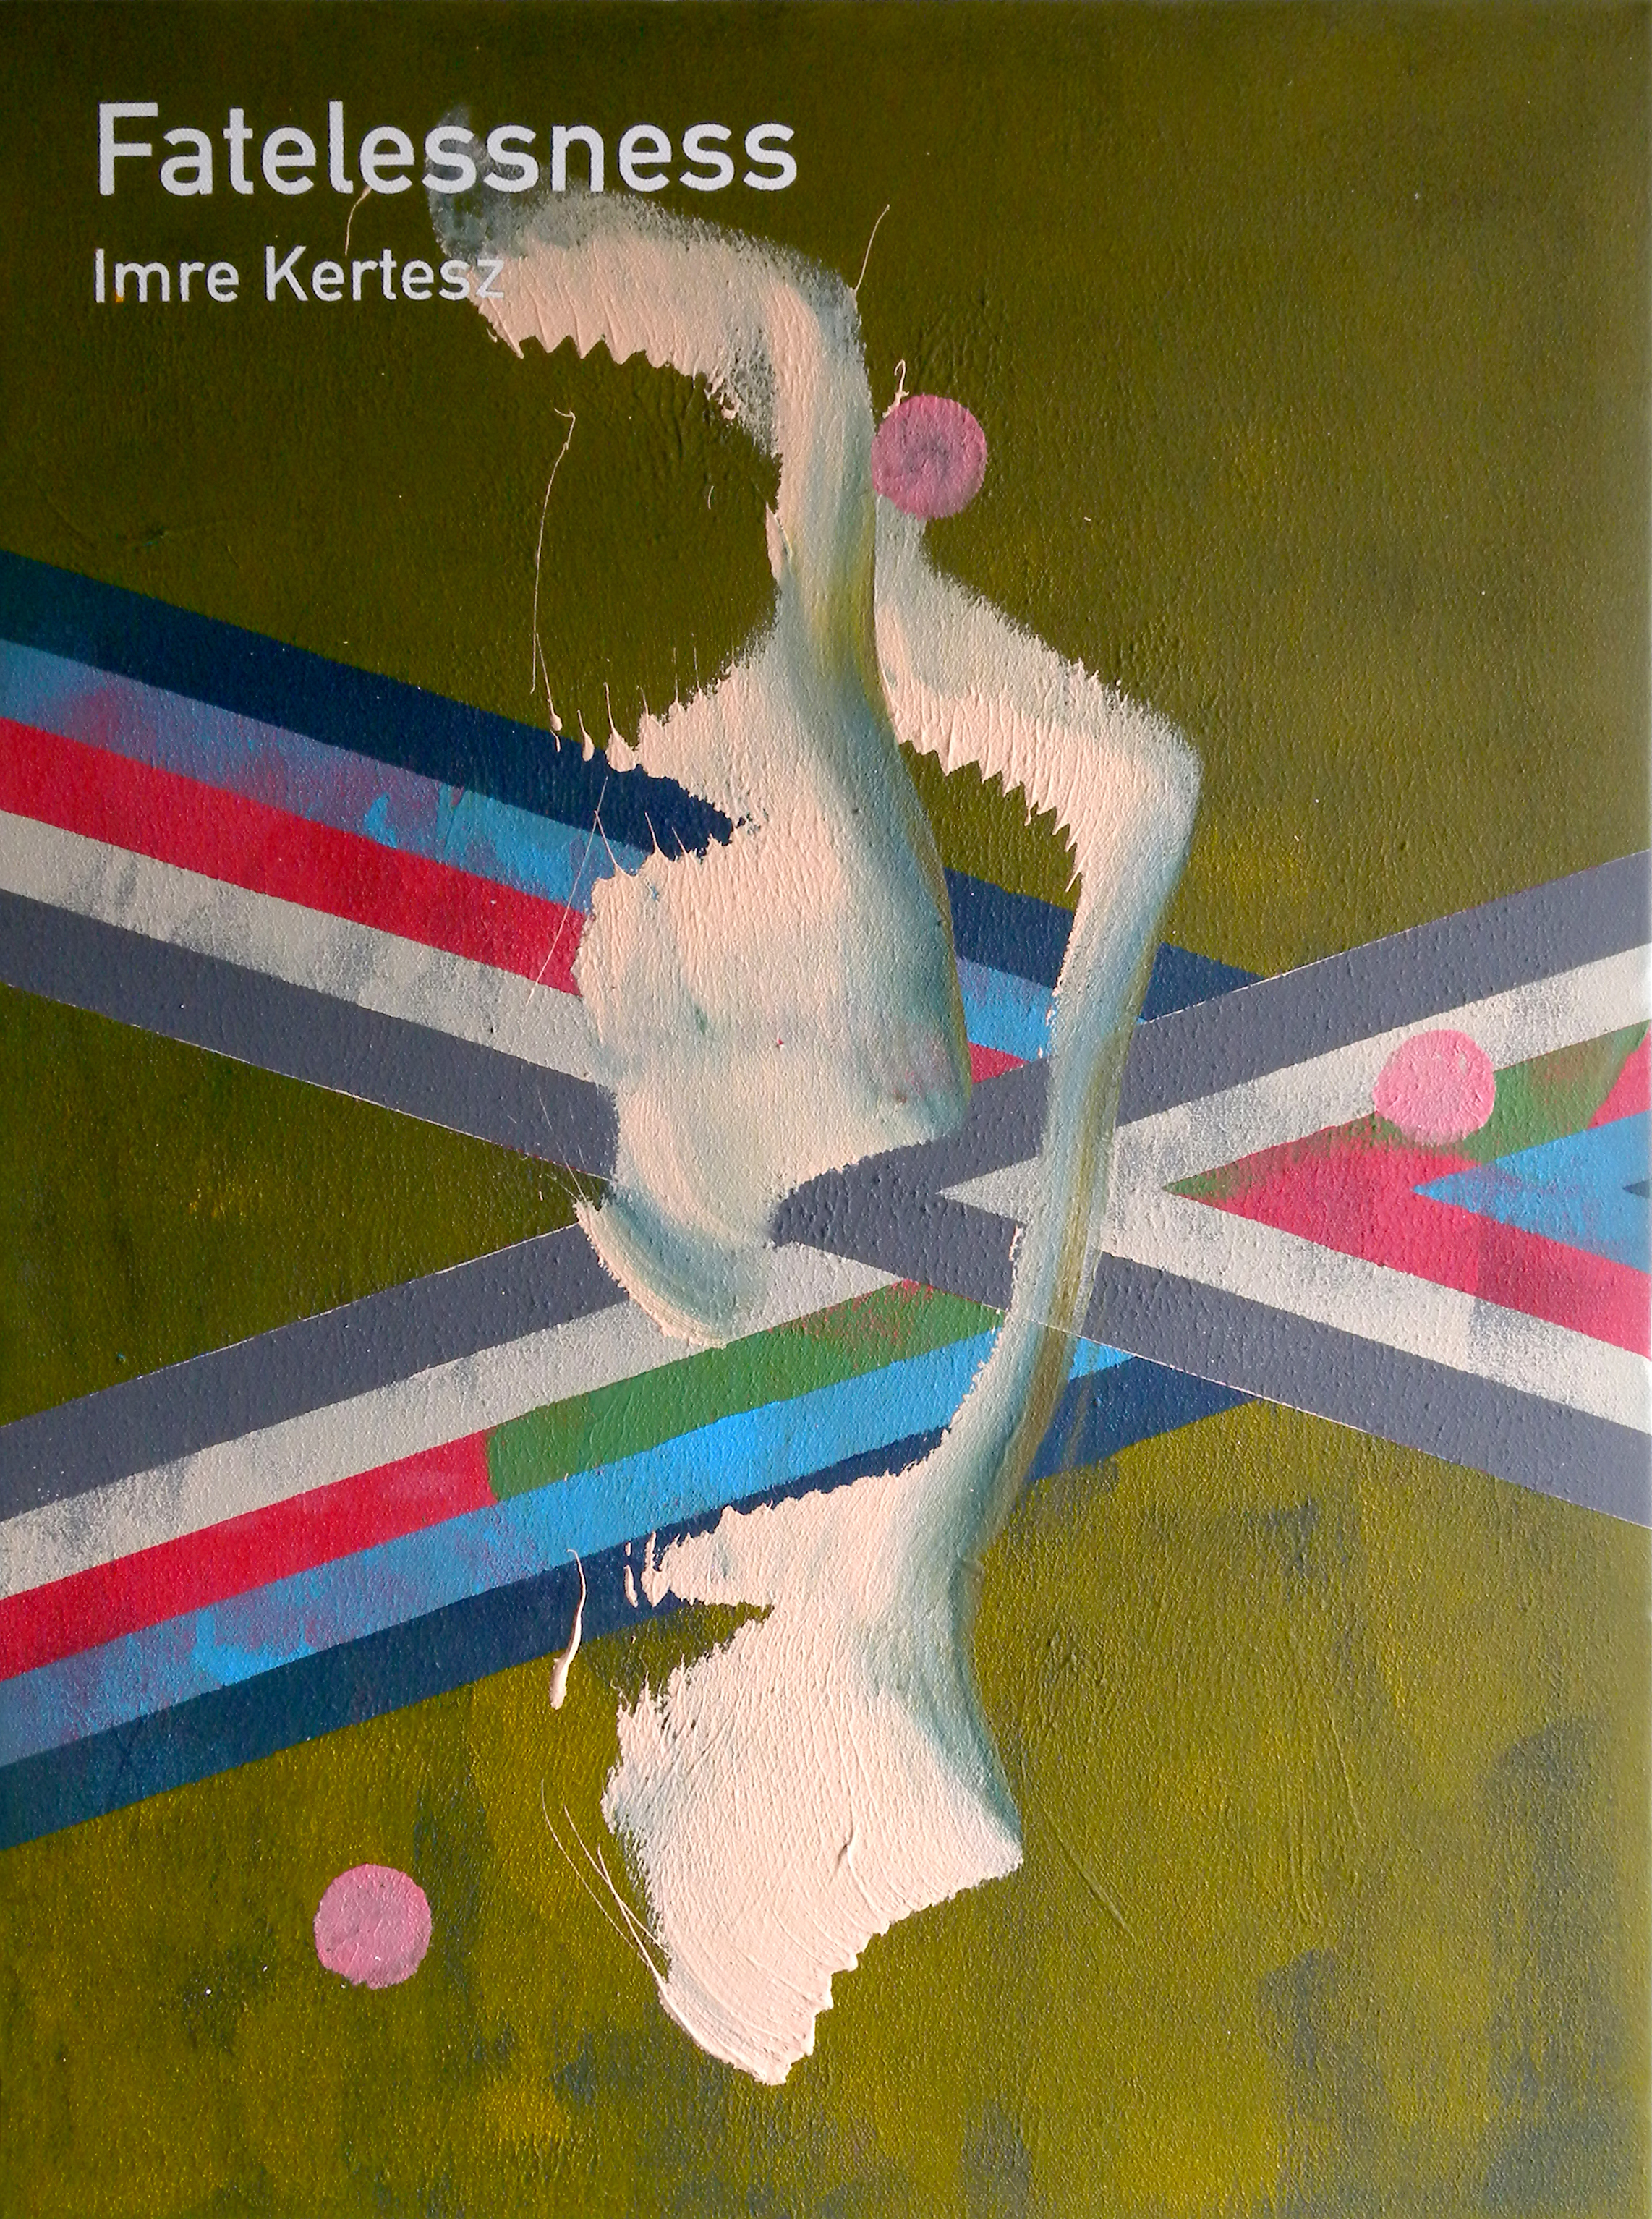   Fatelessness / Imre Kertesz  2013 Acrylic on canvas 46 x 61 x 3.5 cm 